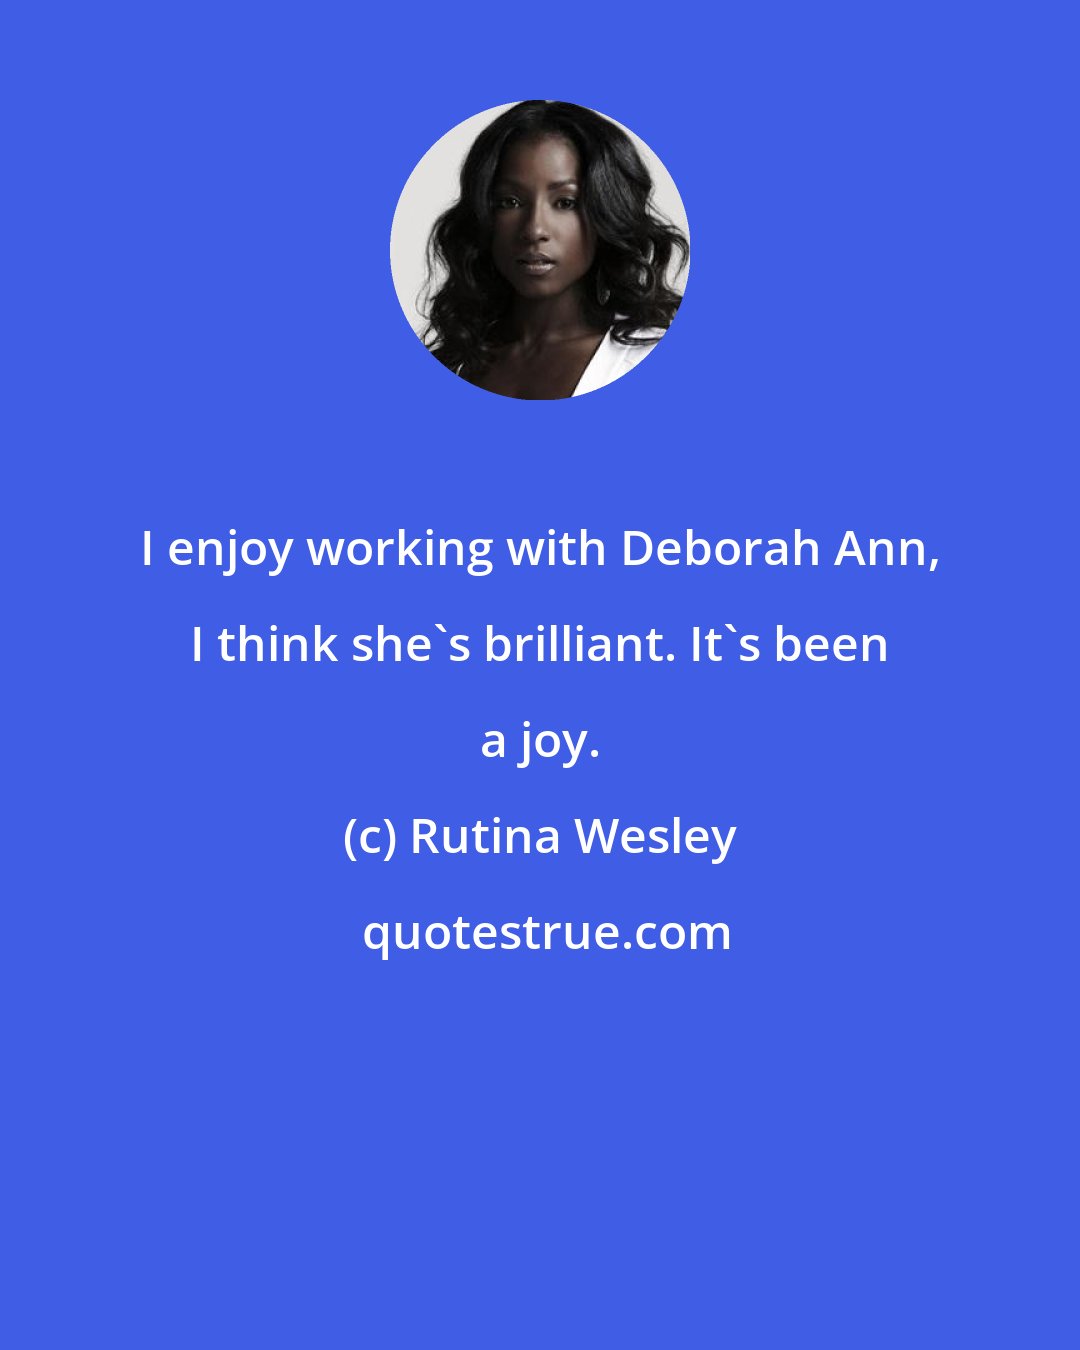 Rutina Wesley: I enjoy working with Deborah Ann, I think she's brilliant. It's been a joy.